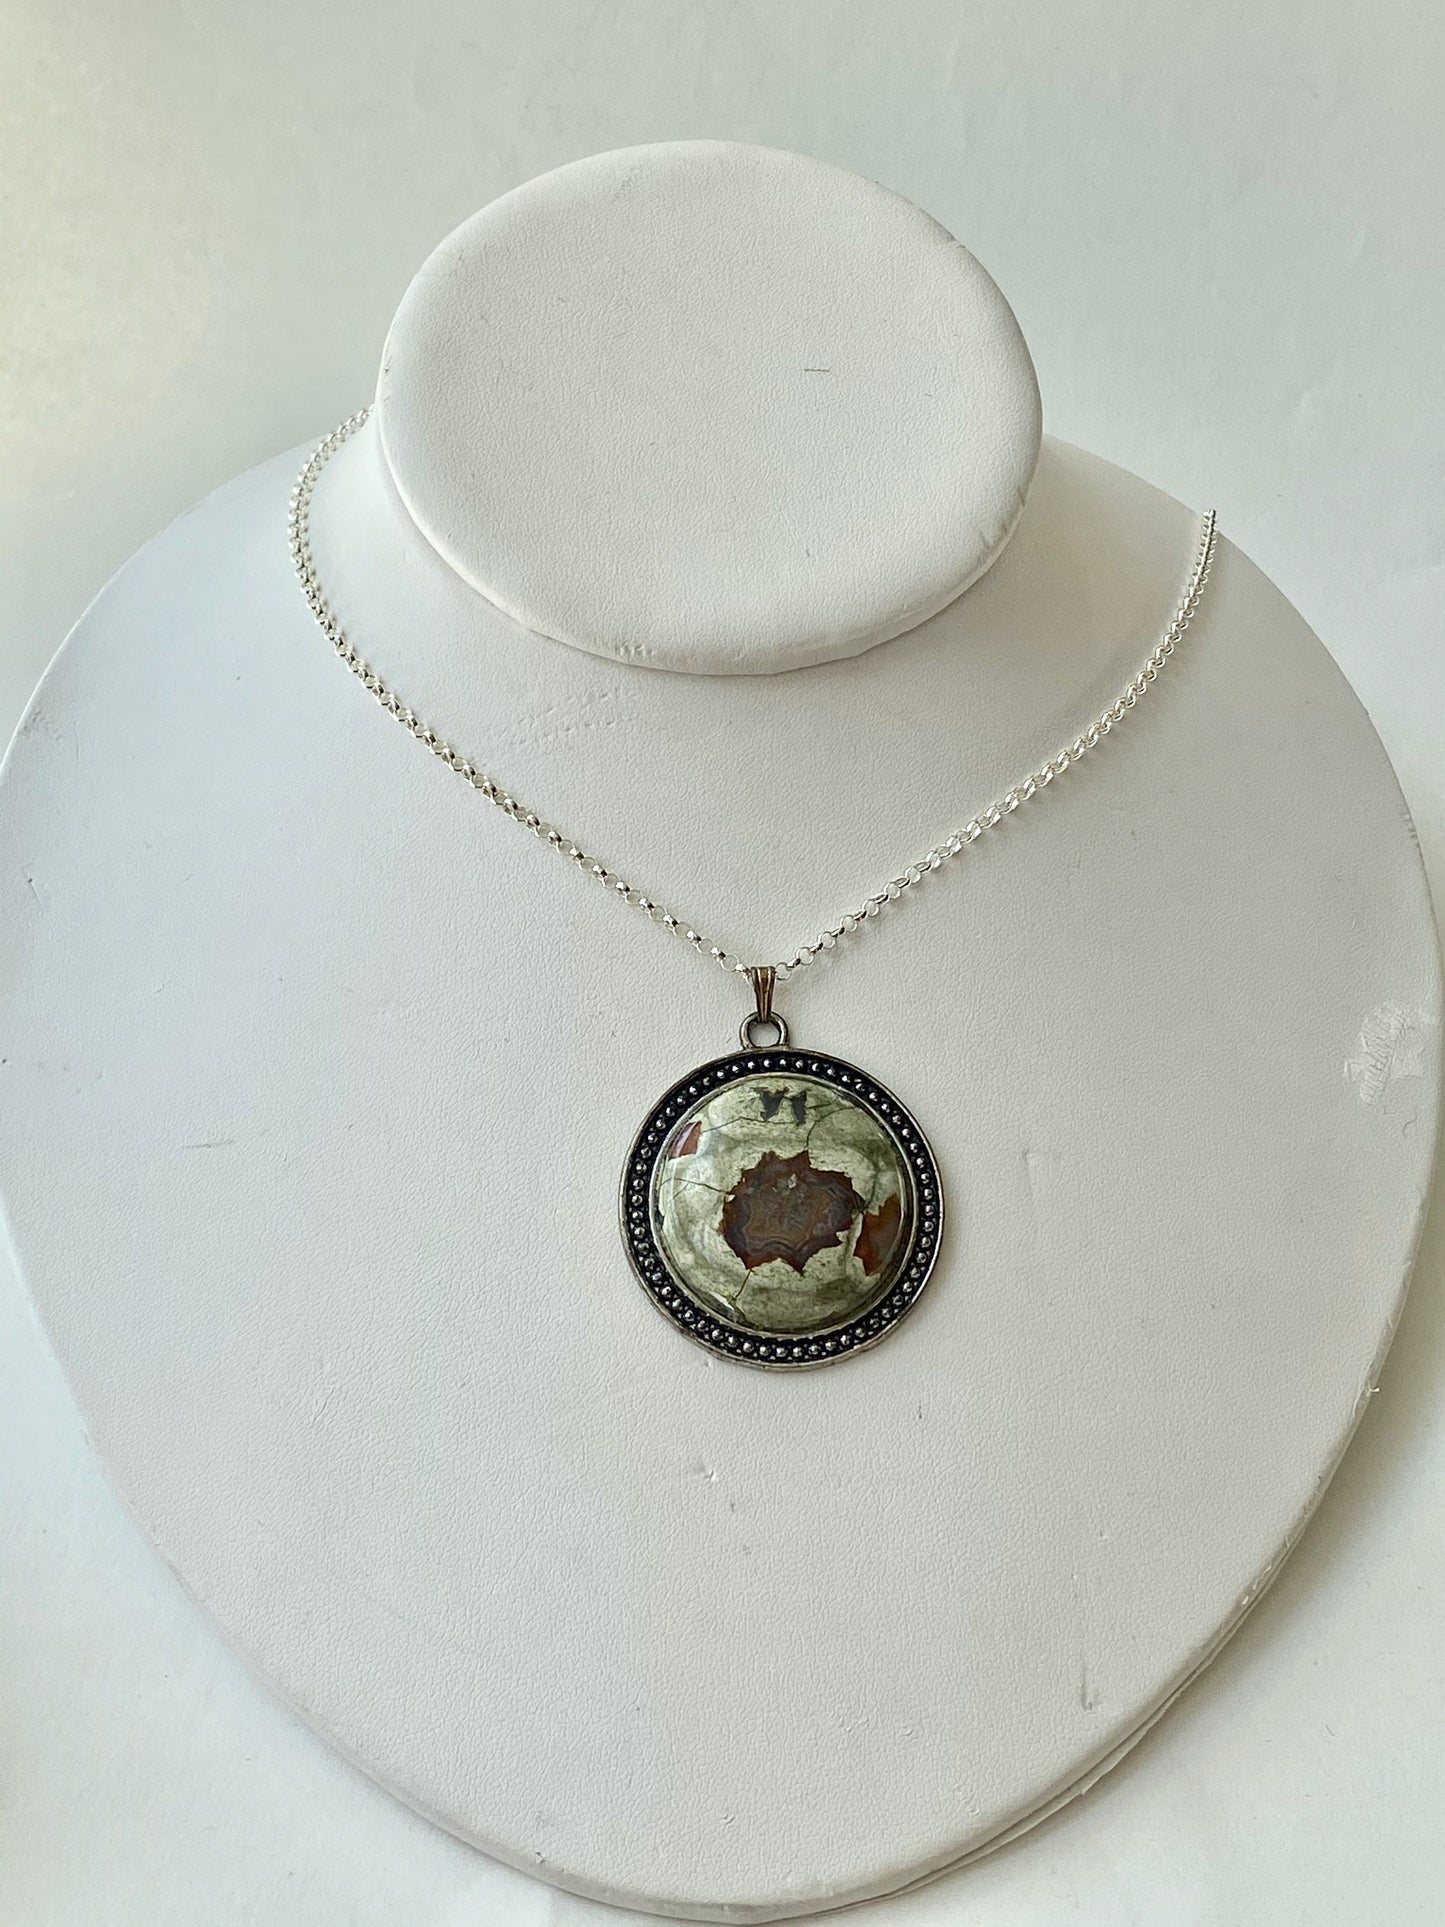 Stunning Rhyolite gemstone pendant strung on beautiful sterling silver chain. Gift for women, birthday gift.